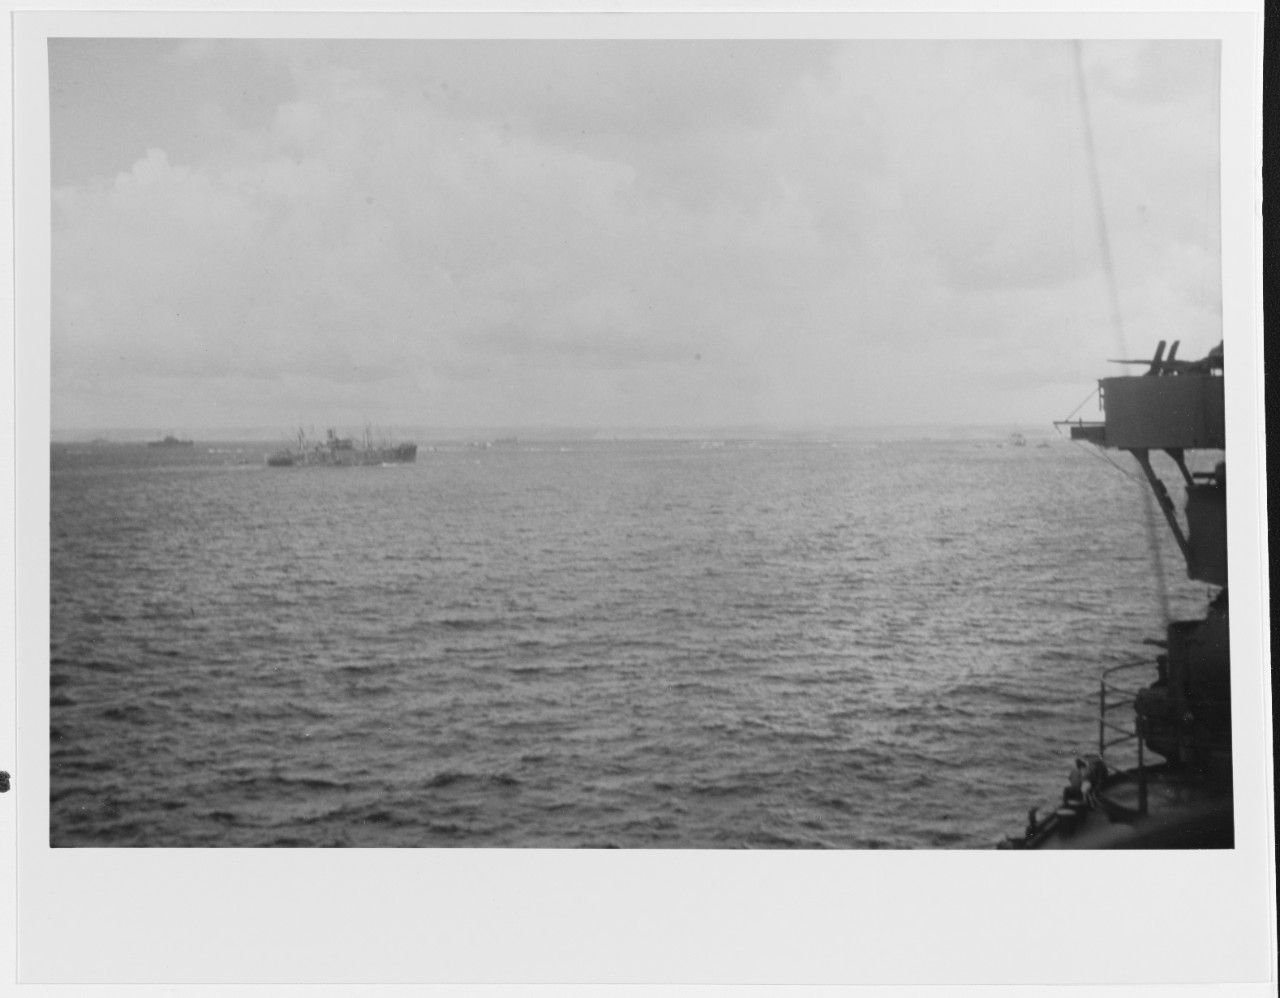 Invasion of Guam, July 1944